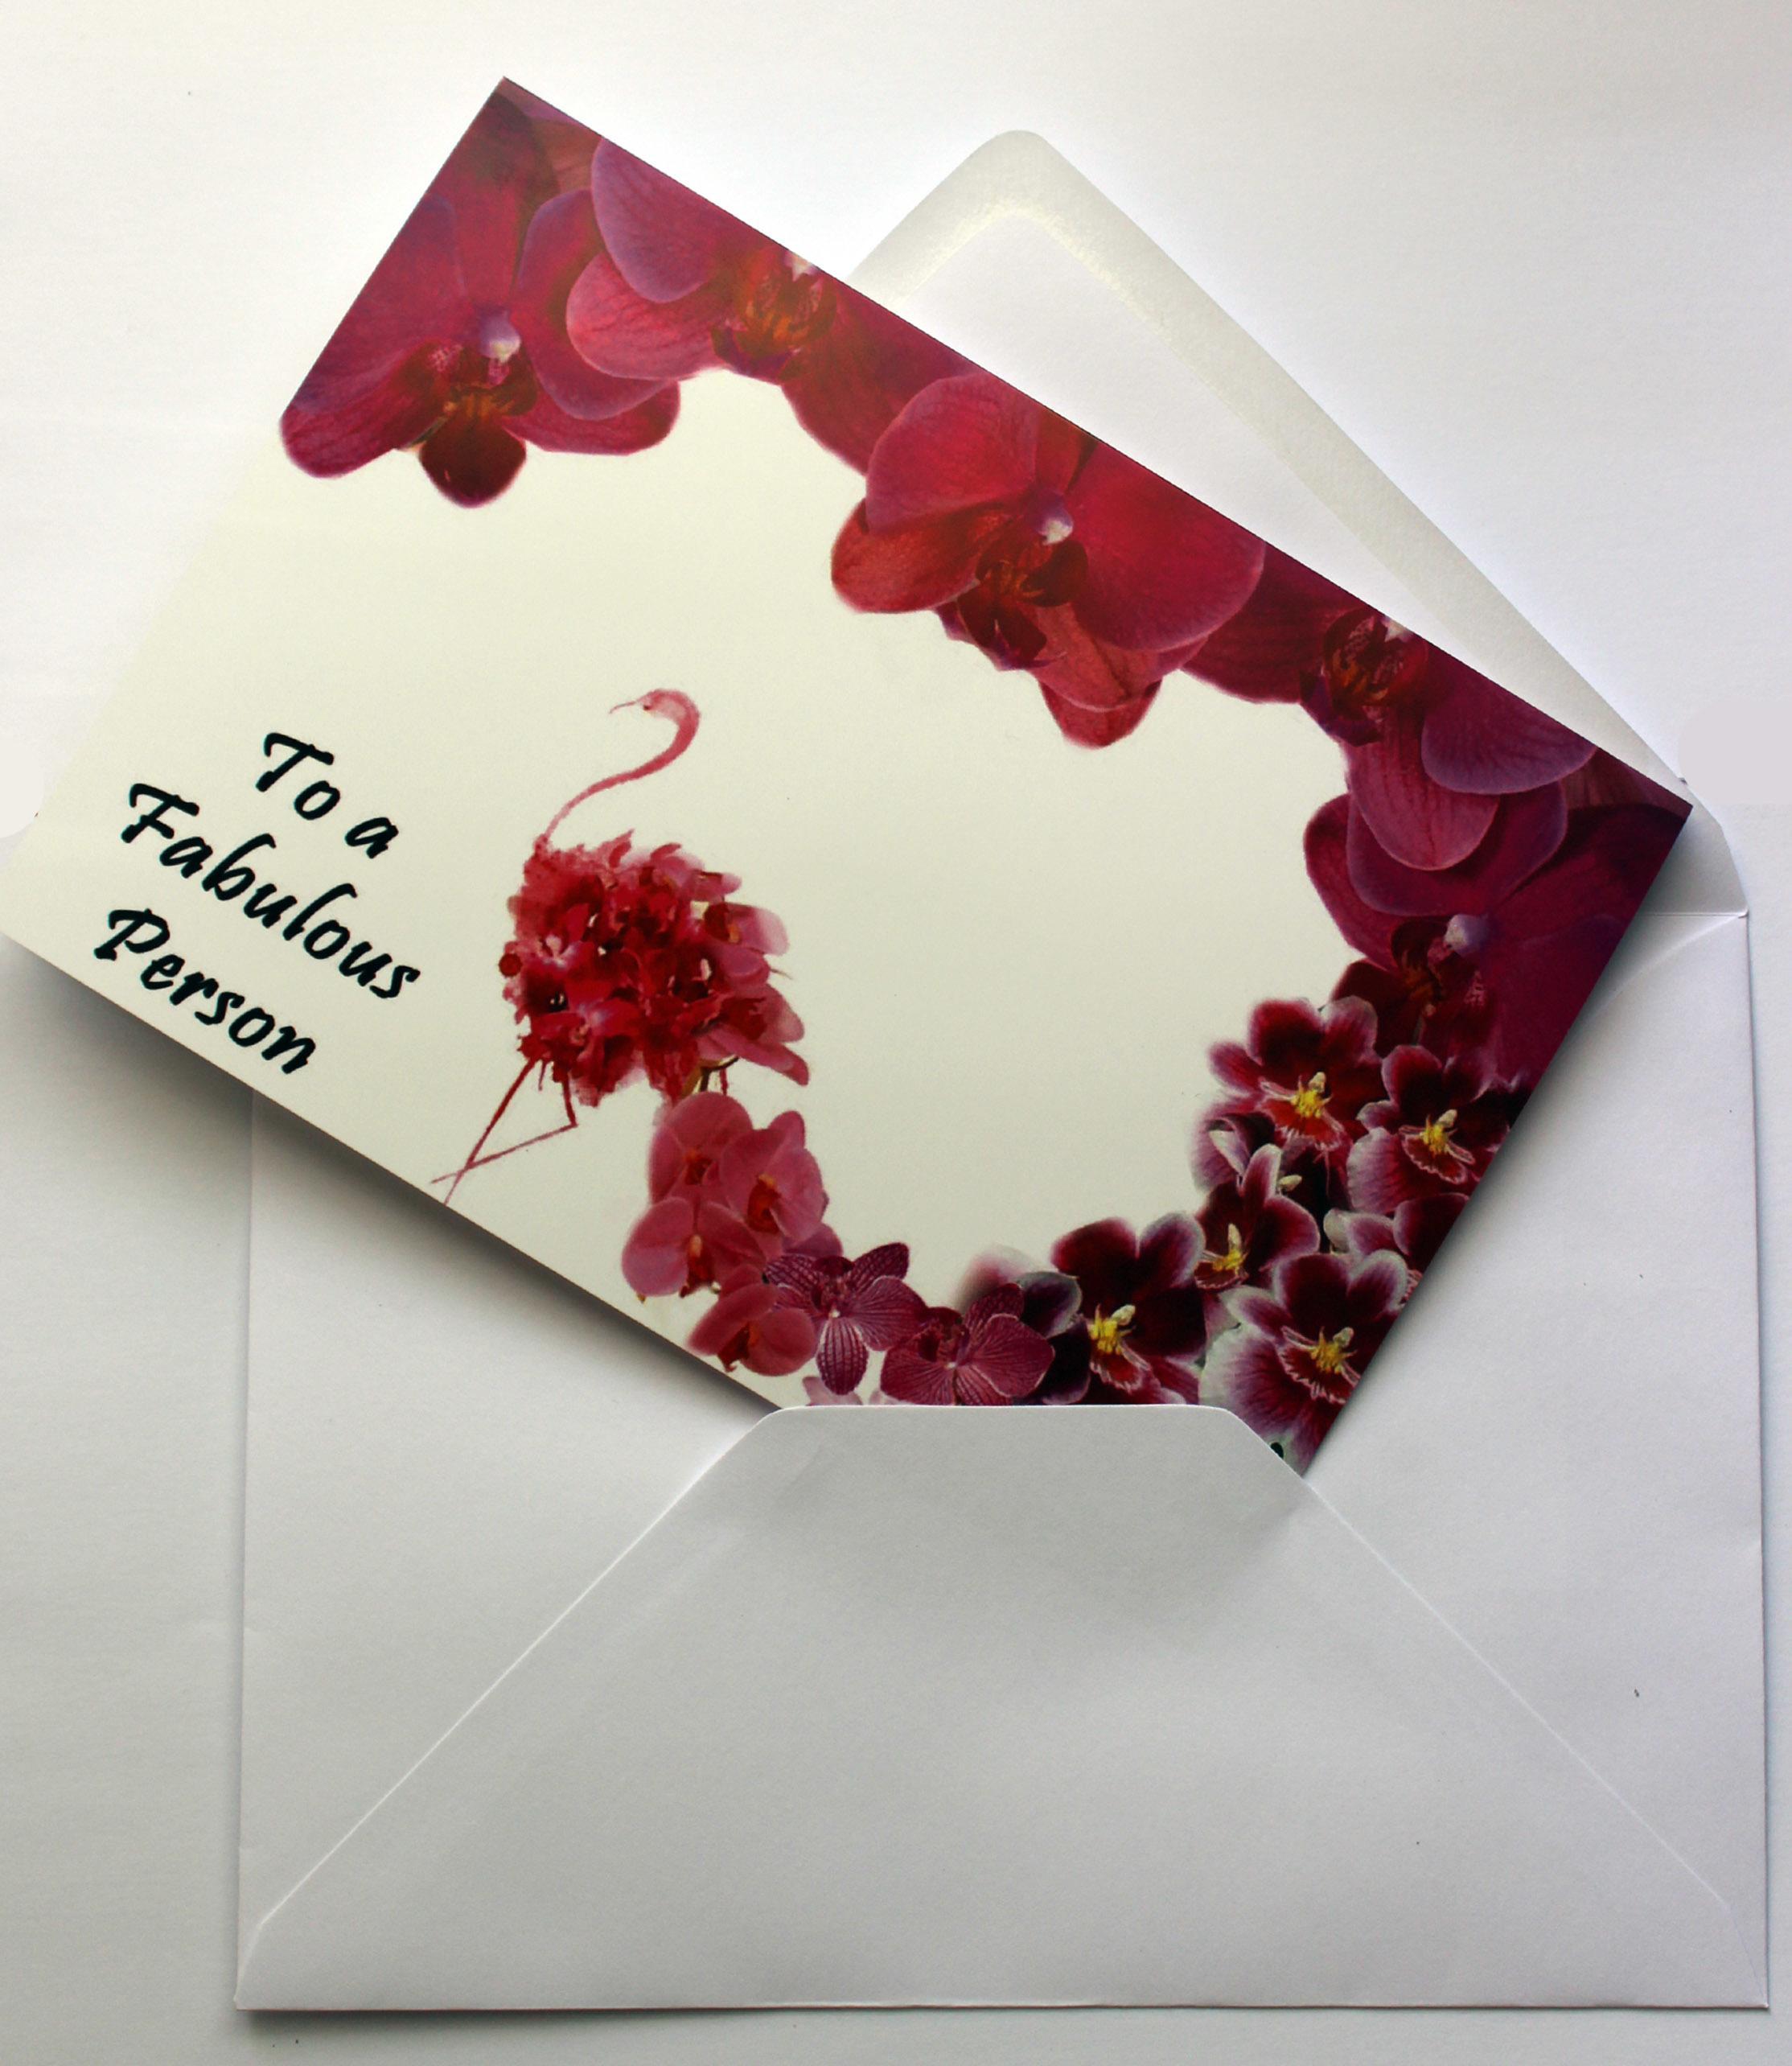 Flamingo Orchid Greeting Card in gummed envelope